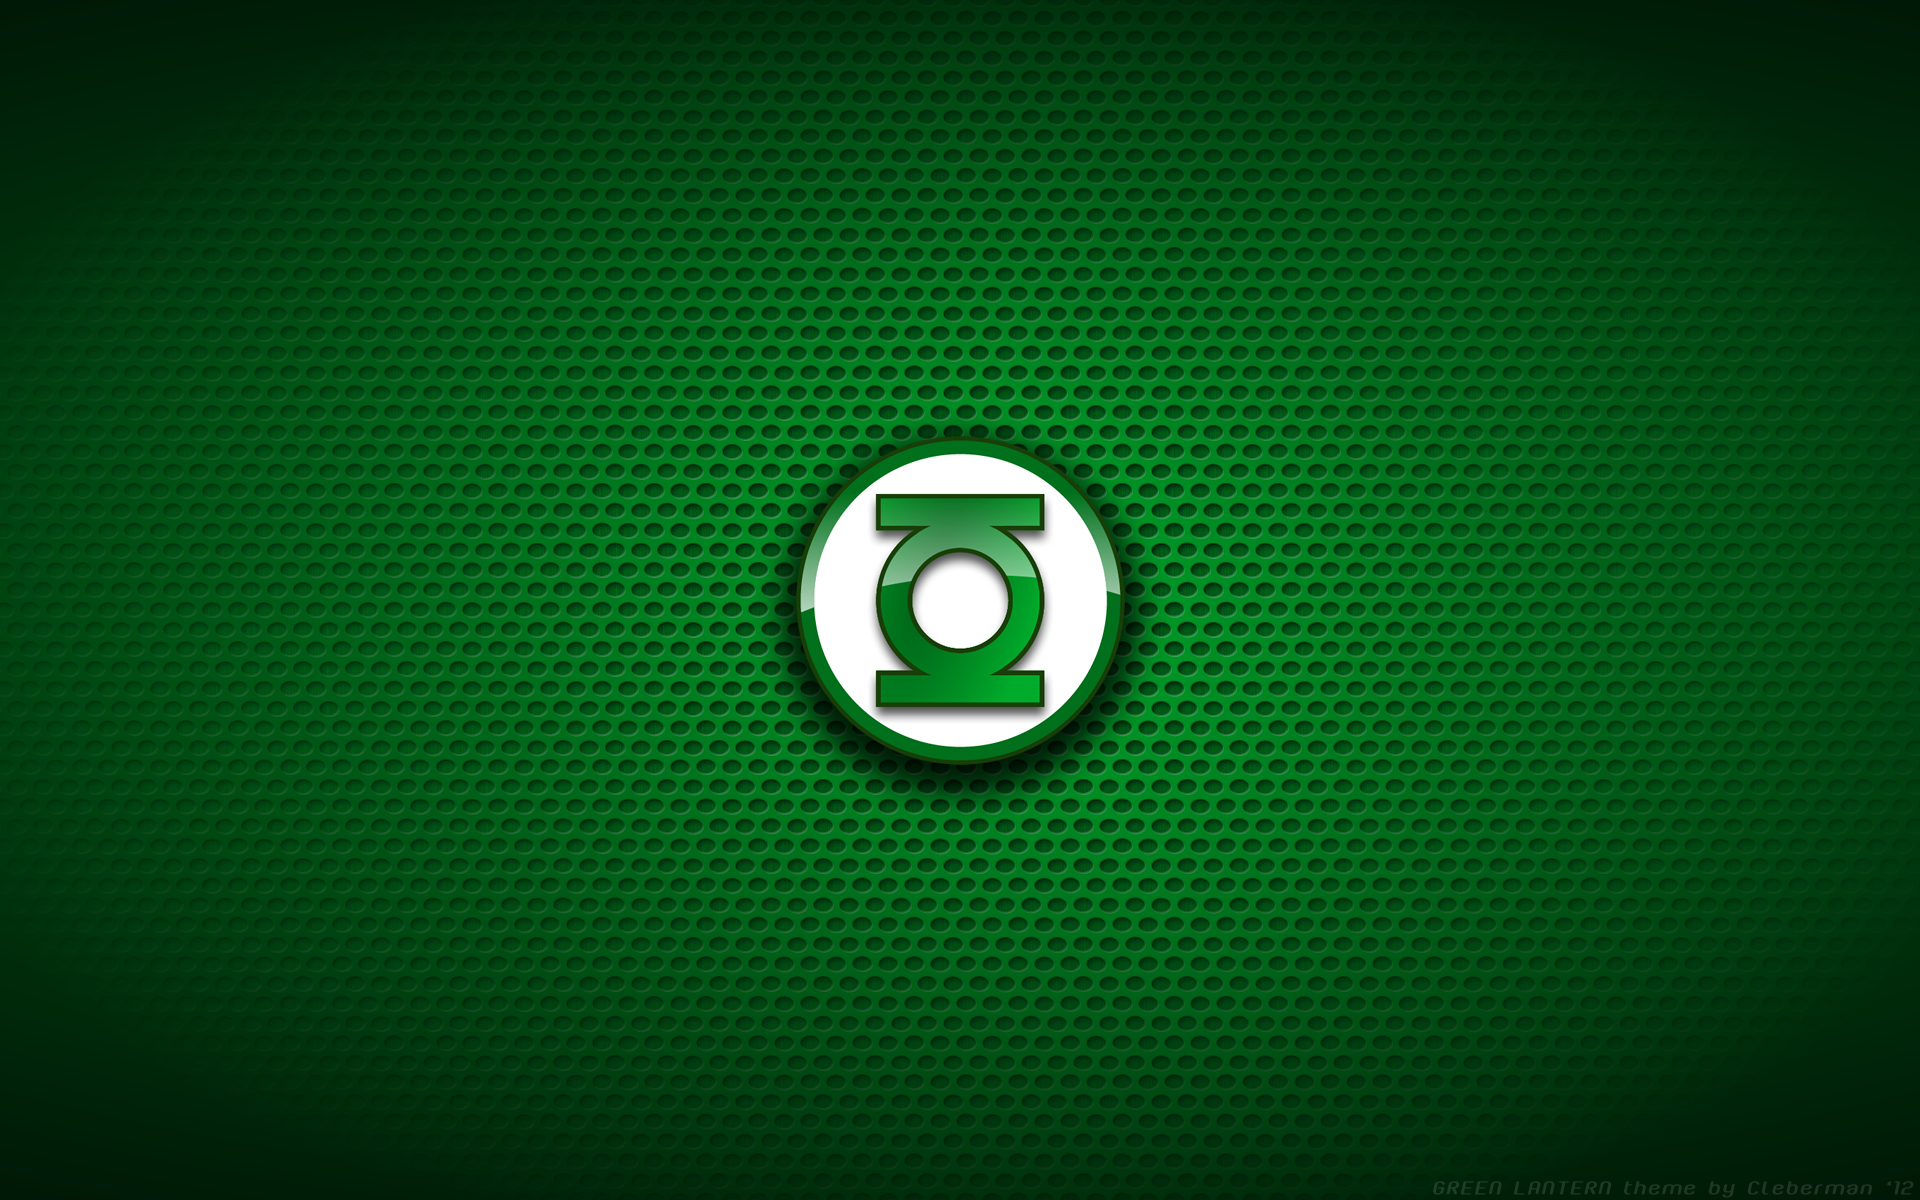 Green Lantern Puter Wallpaper Desktop Background